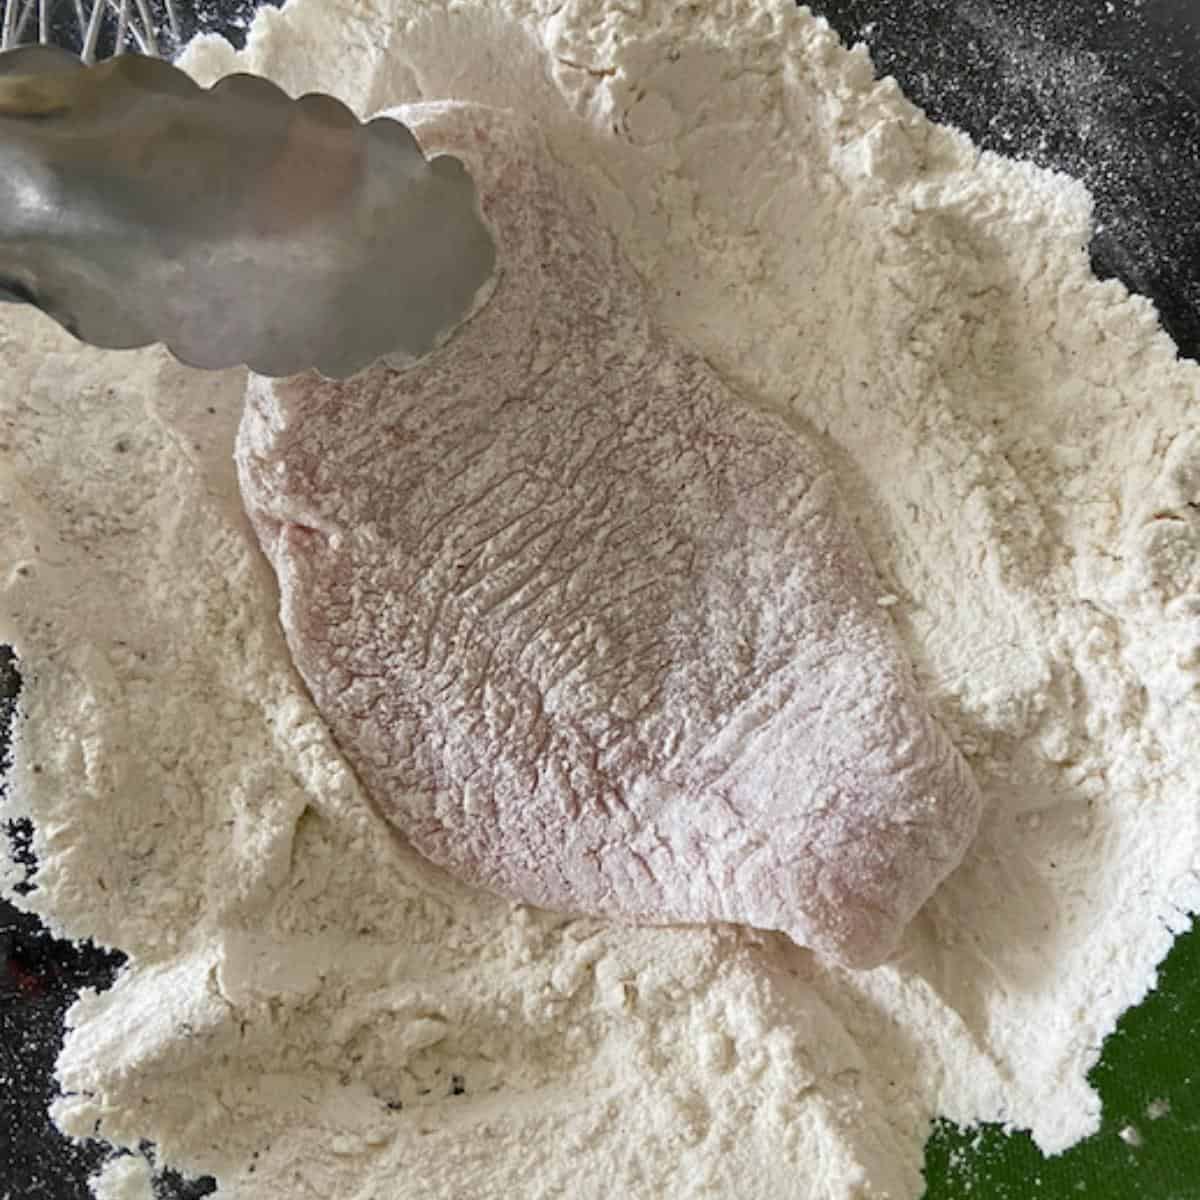 Tongs coating chicken in flour mixture.